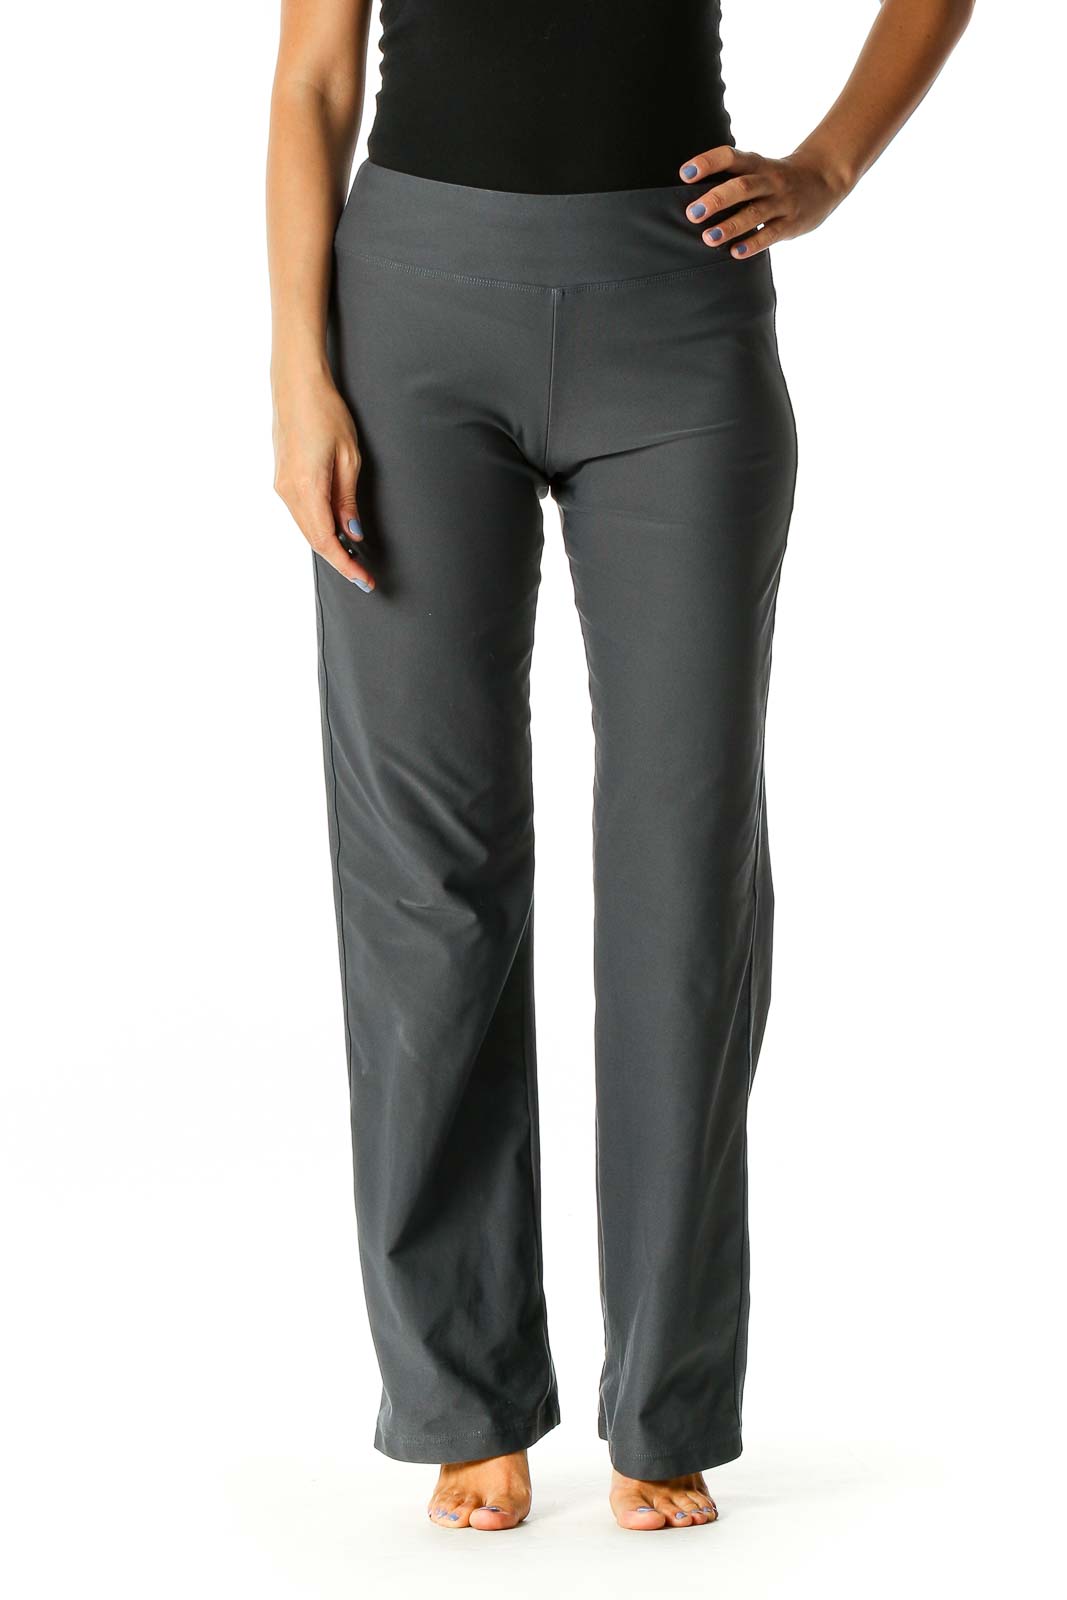 Nike - Gray Solid Activewear Pants Polyester Spandex | SilkRoll